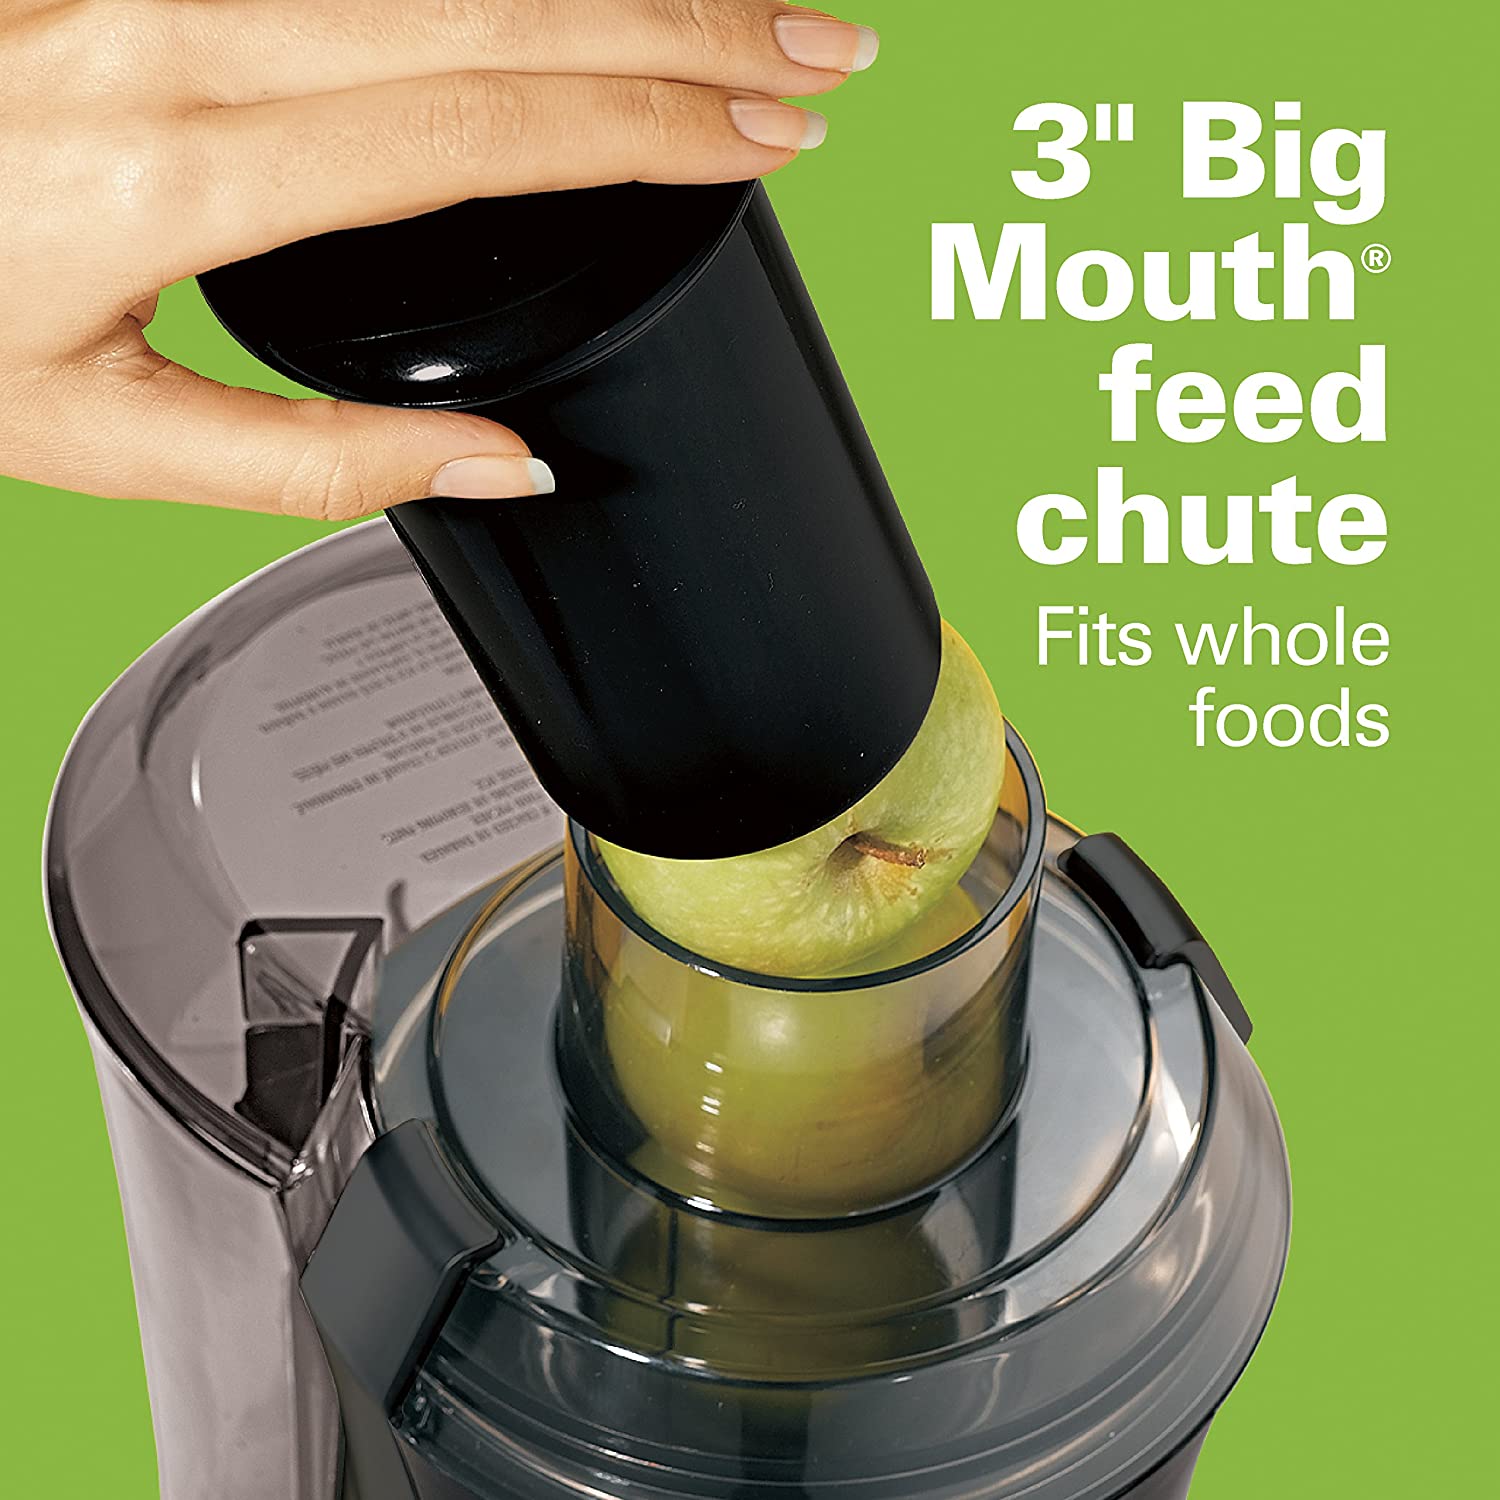 Hamilton Beach Premium Juicer Machine Big Mouth 3 inch Feed Chute